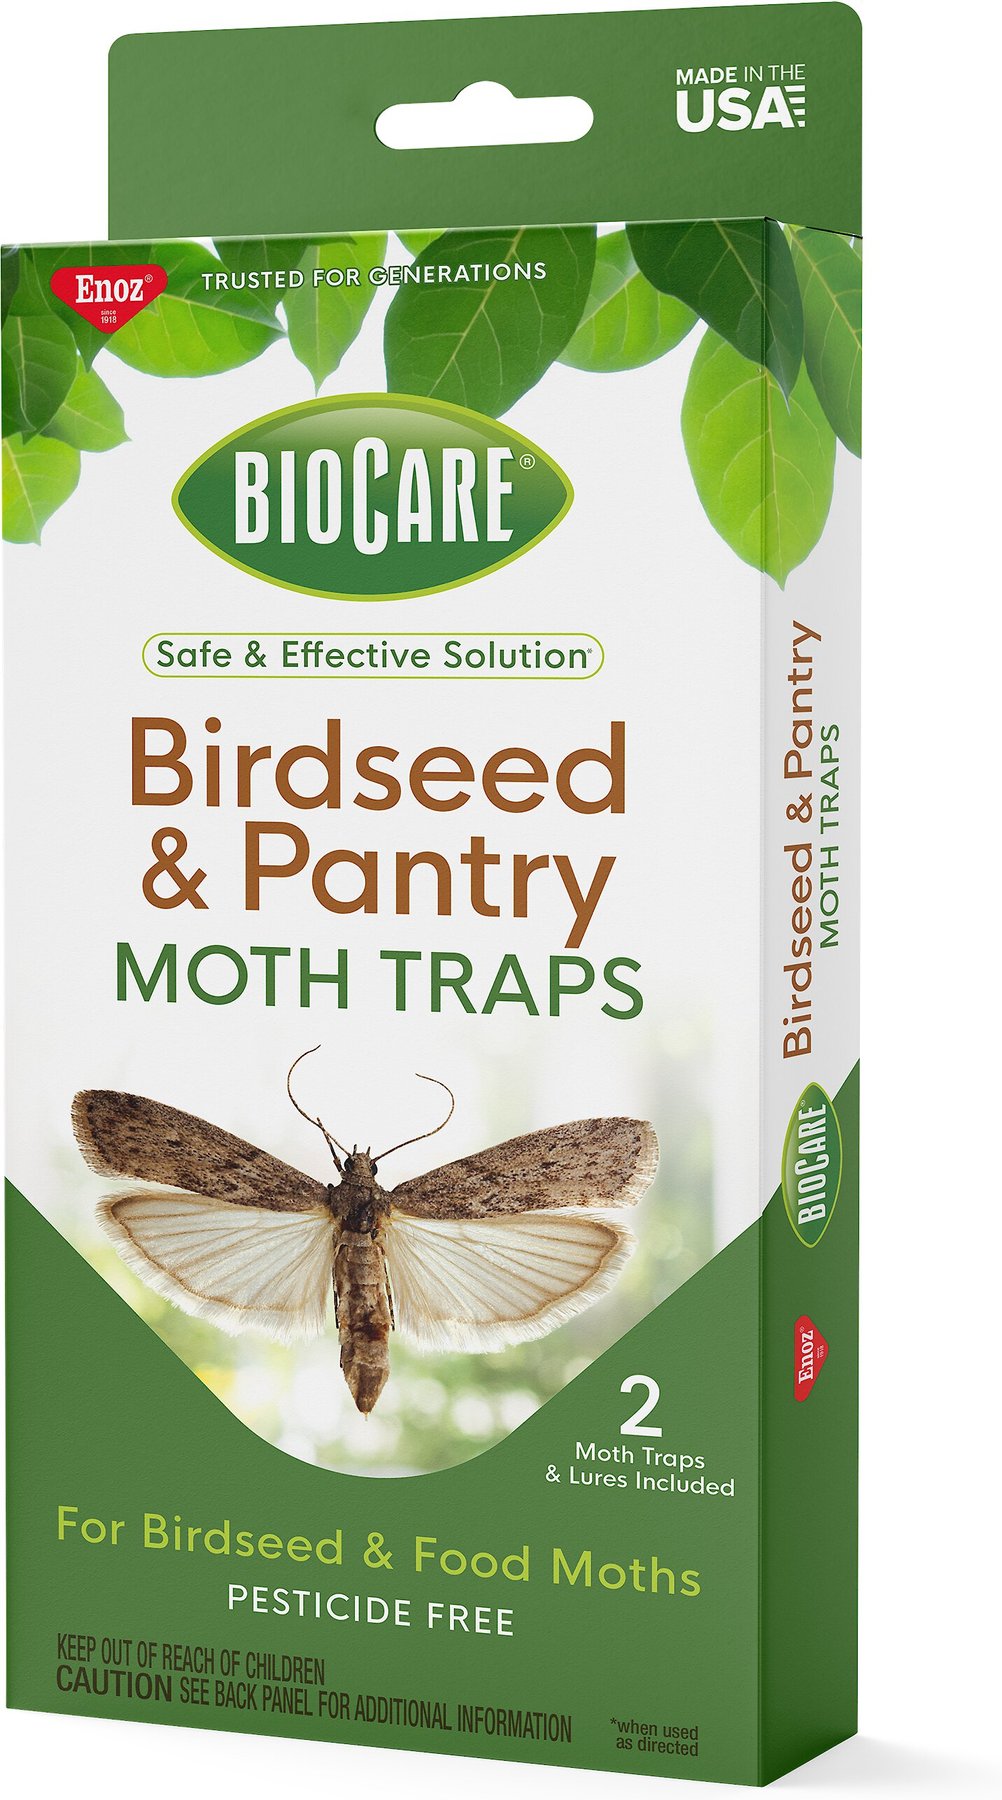 Professional Clothes Moth Trap (Set of 10)